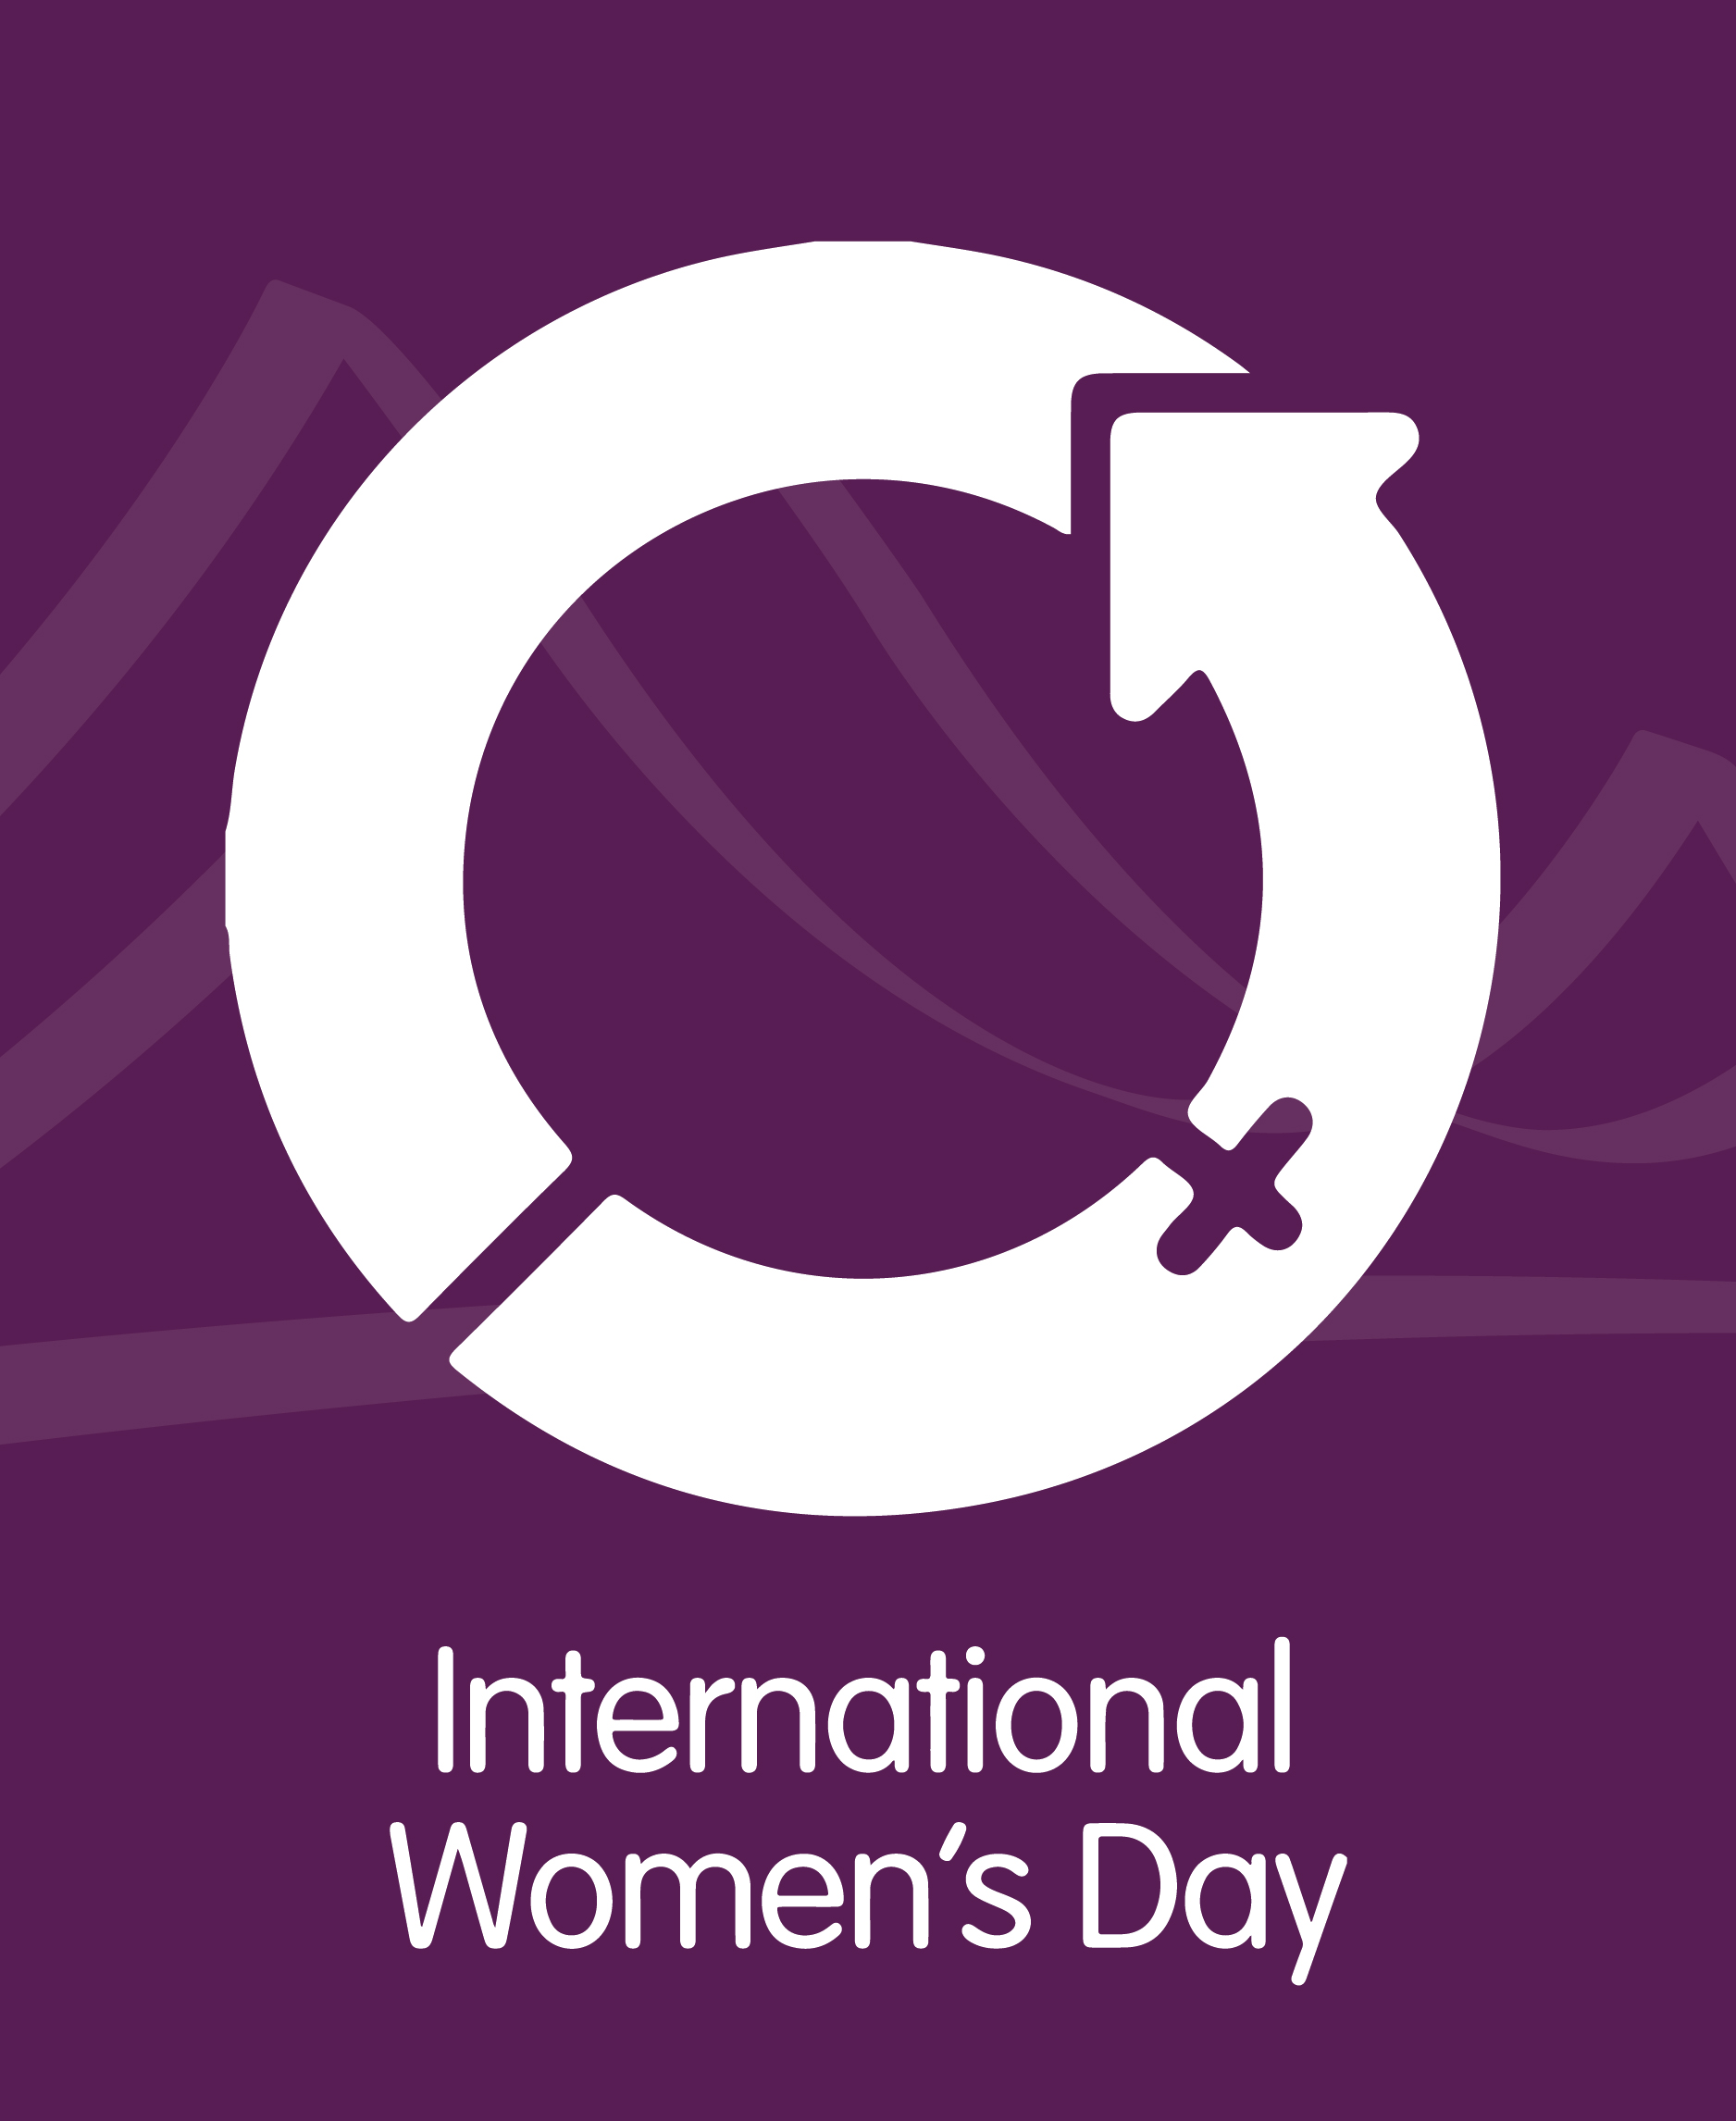 International Women's Day. We actively embrace diversity. - WestBridge